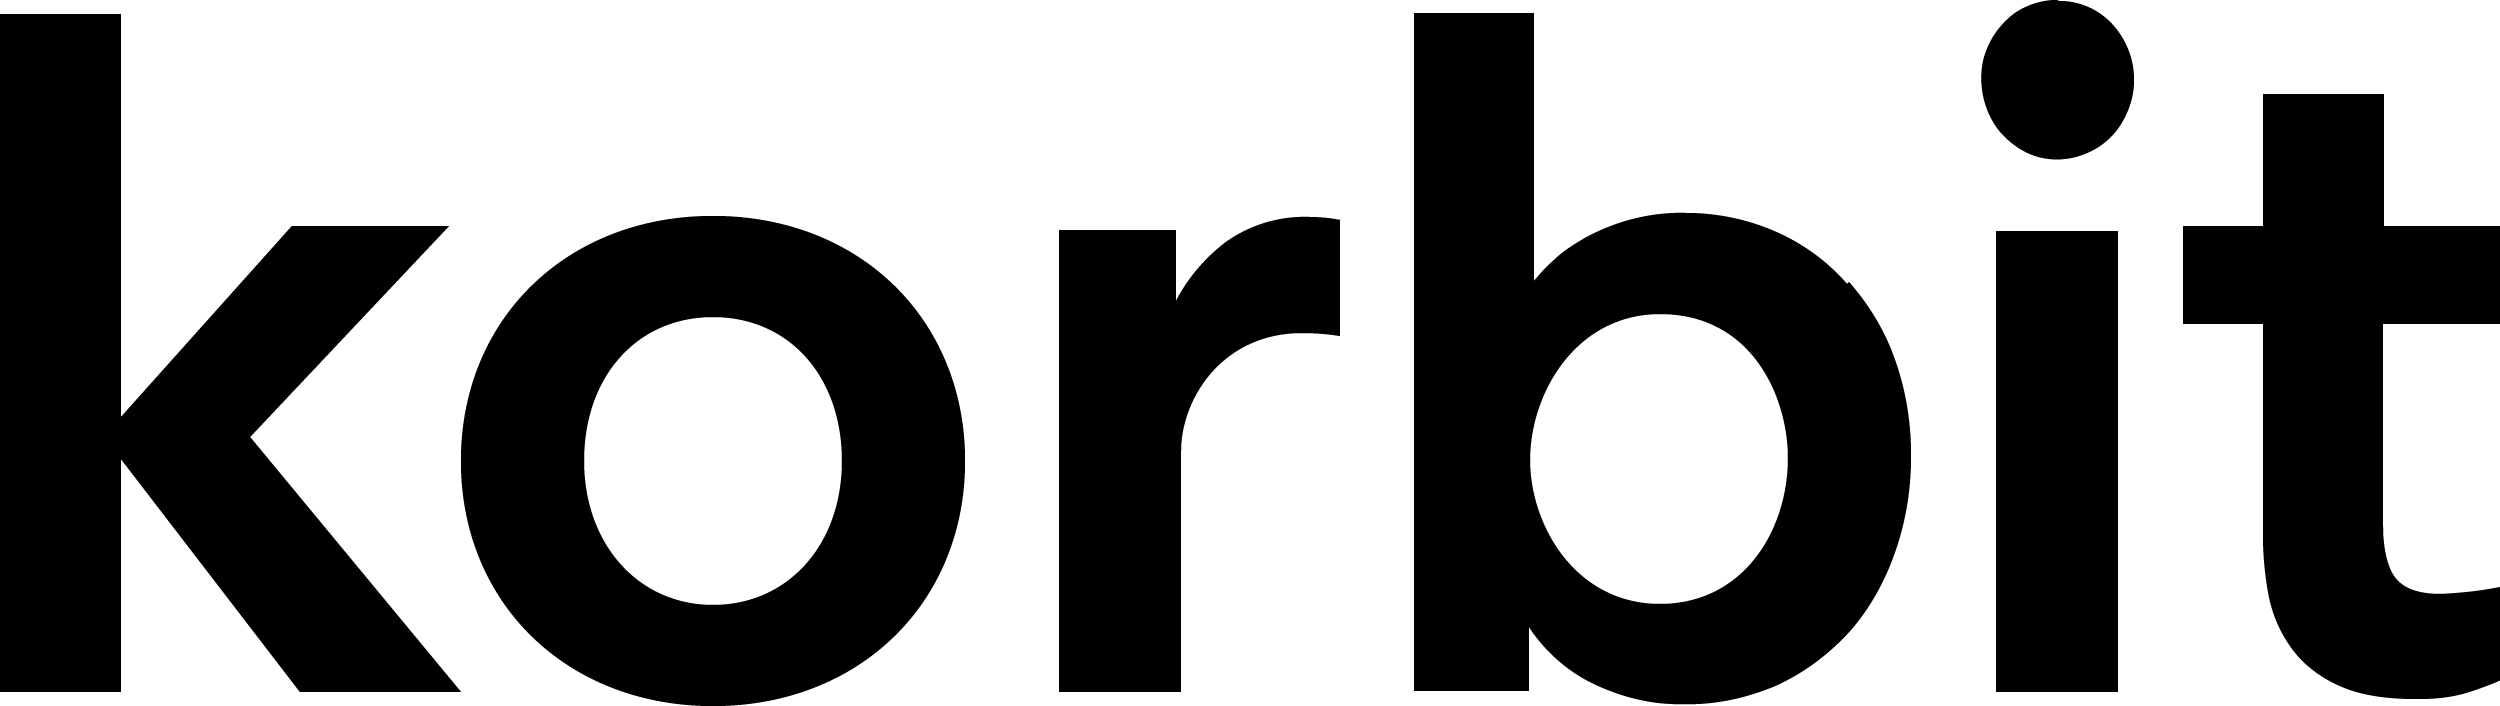 Korbit Logo